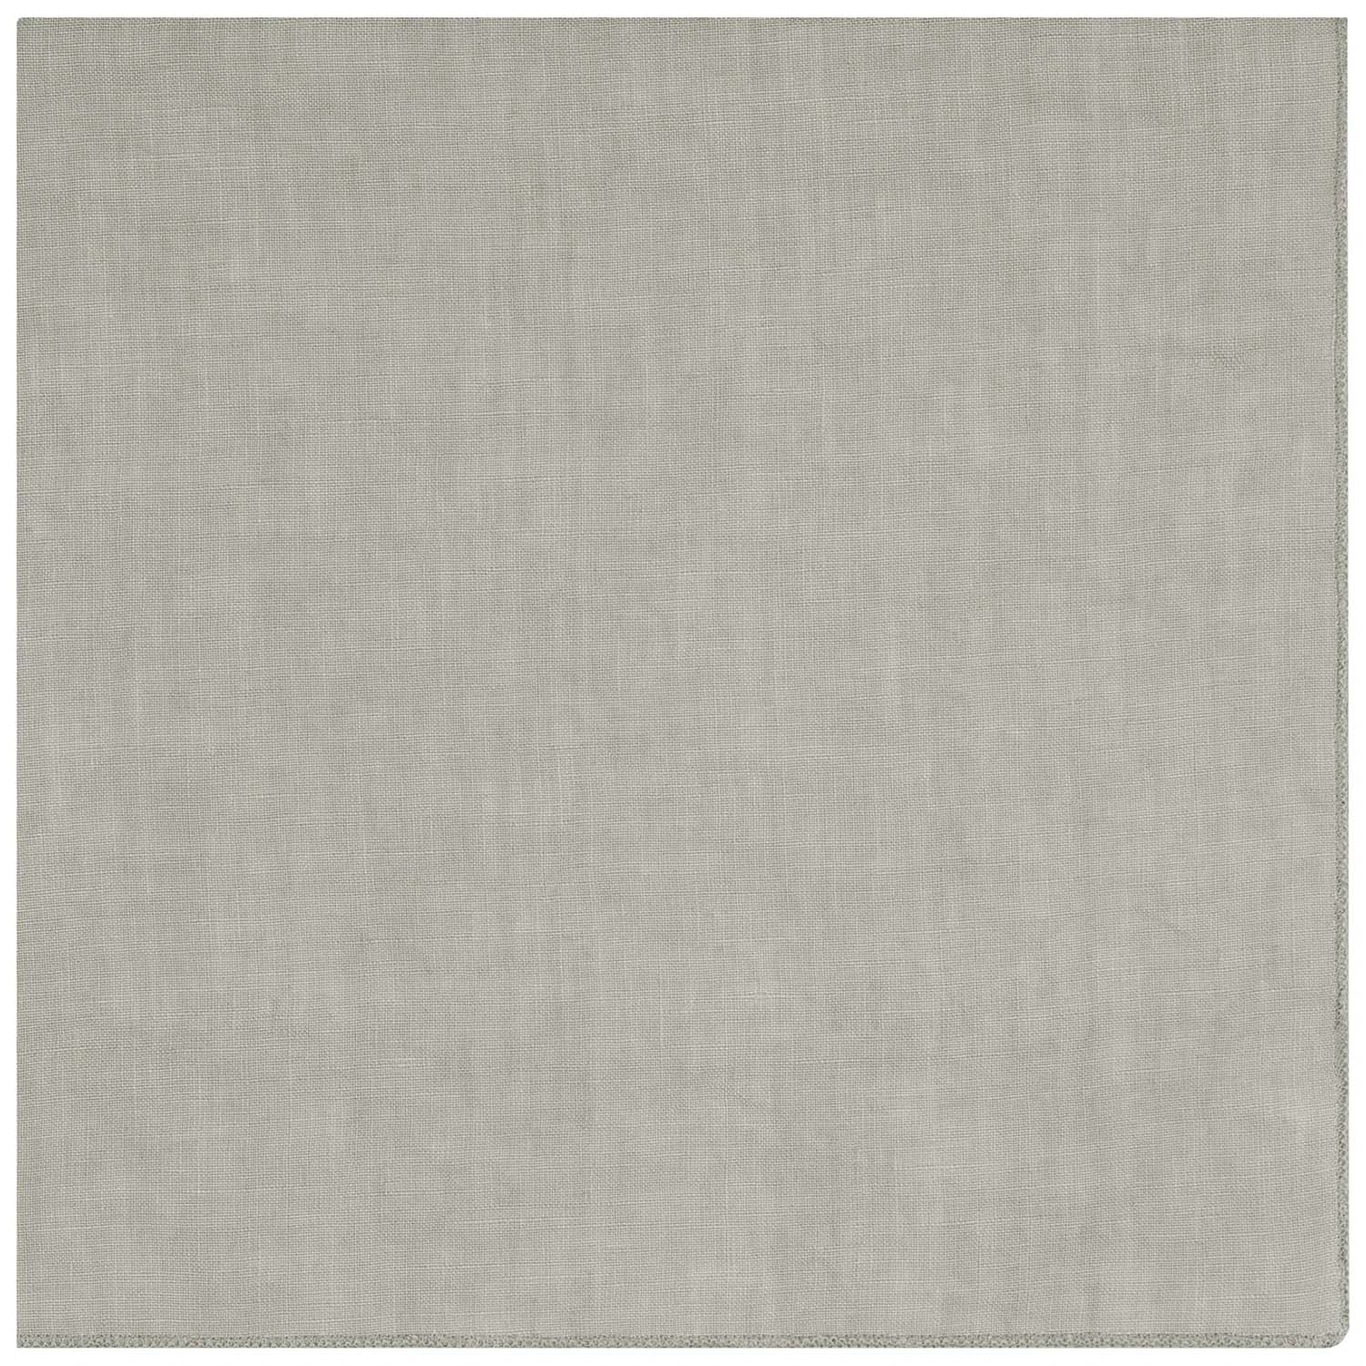 LINEO Tissue Linen, Mirage Gray